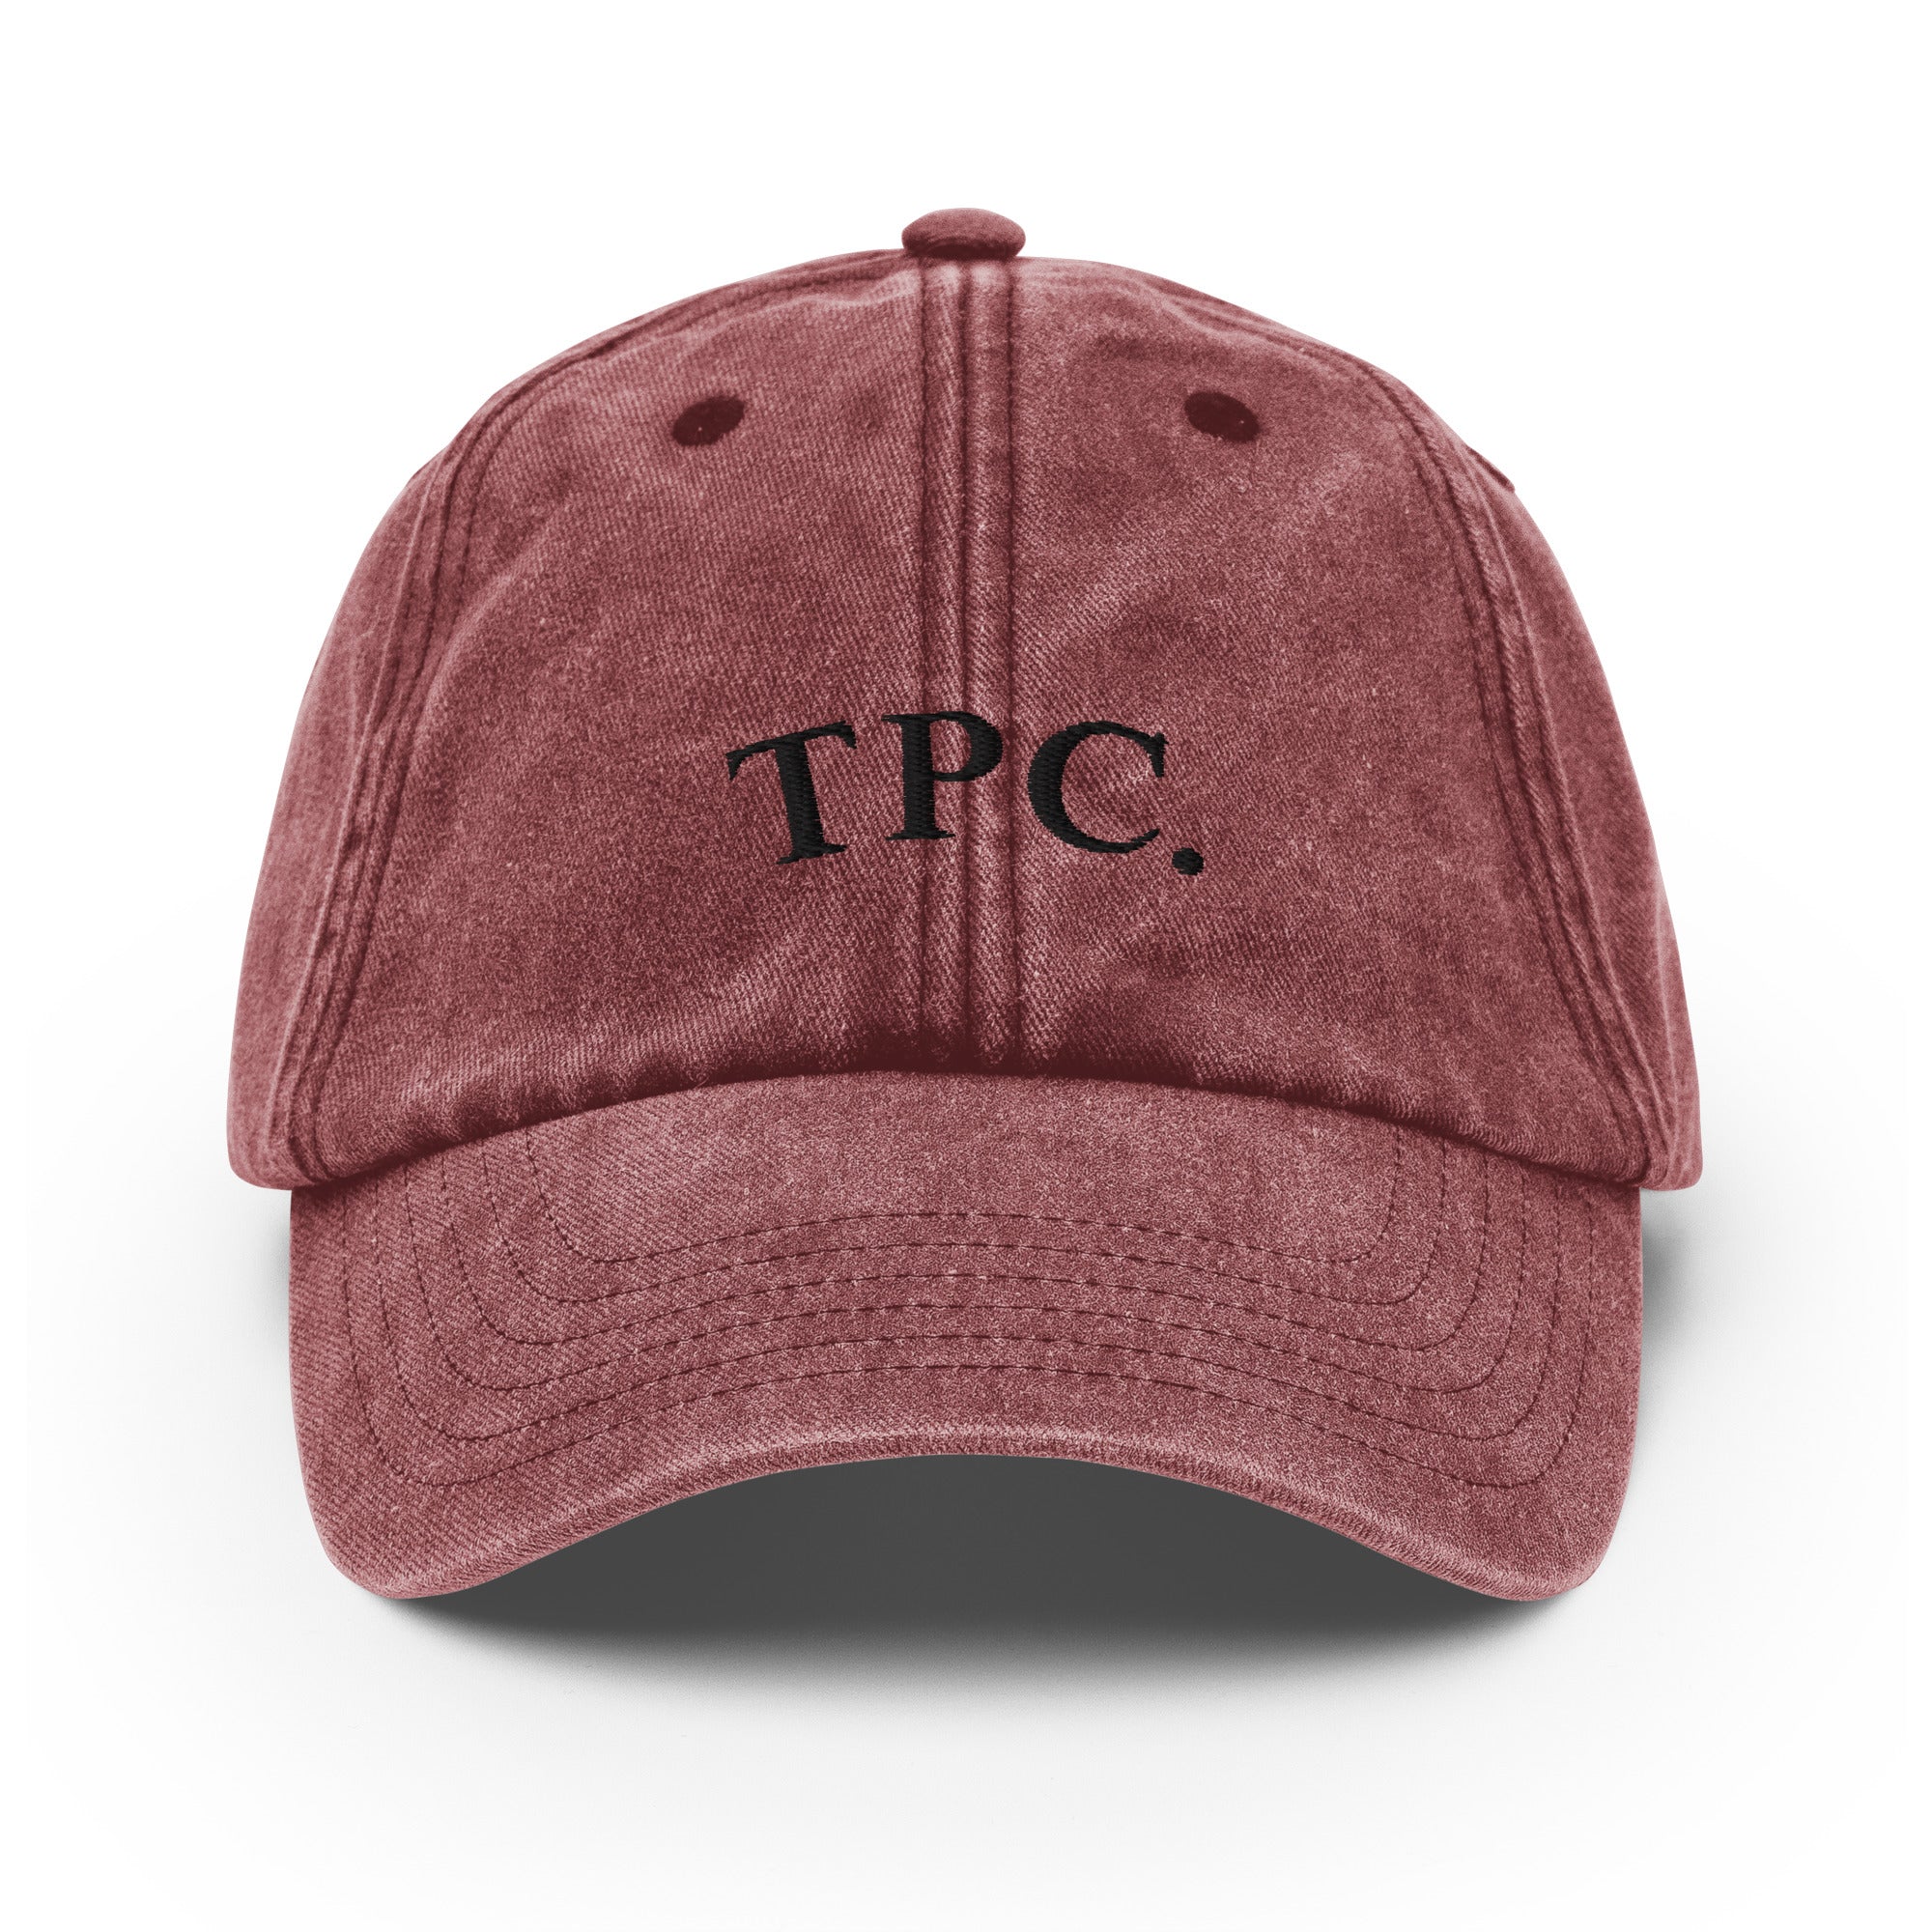 tpc(tokyo performance club)のcap - 帽子